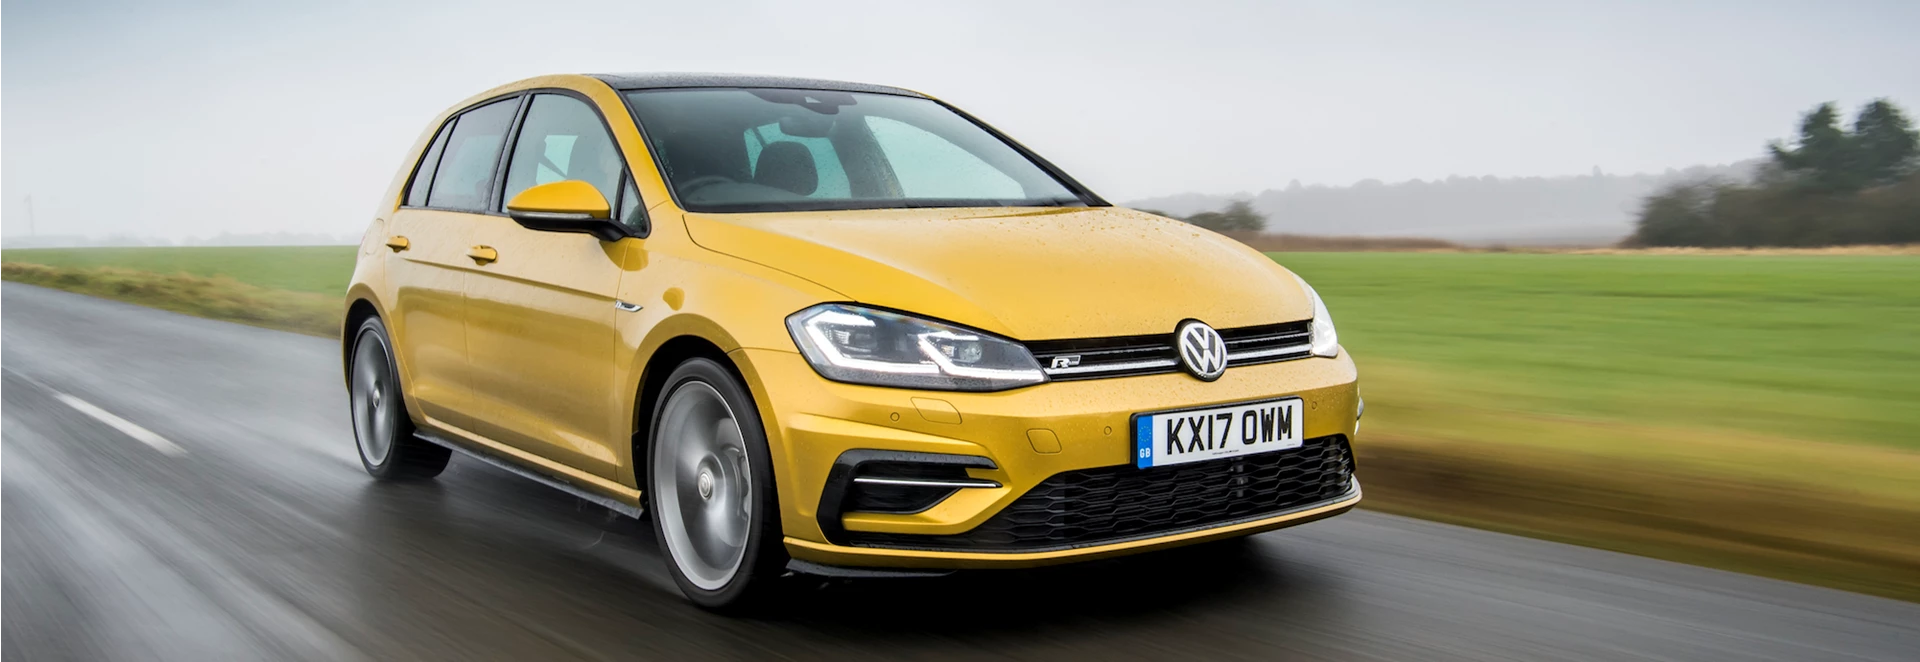 Next Volkswagen Golf to come with mild-hybrid setup